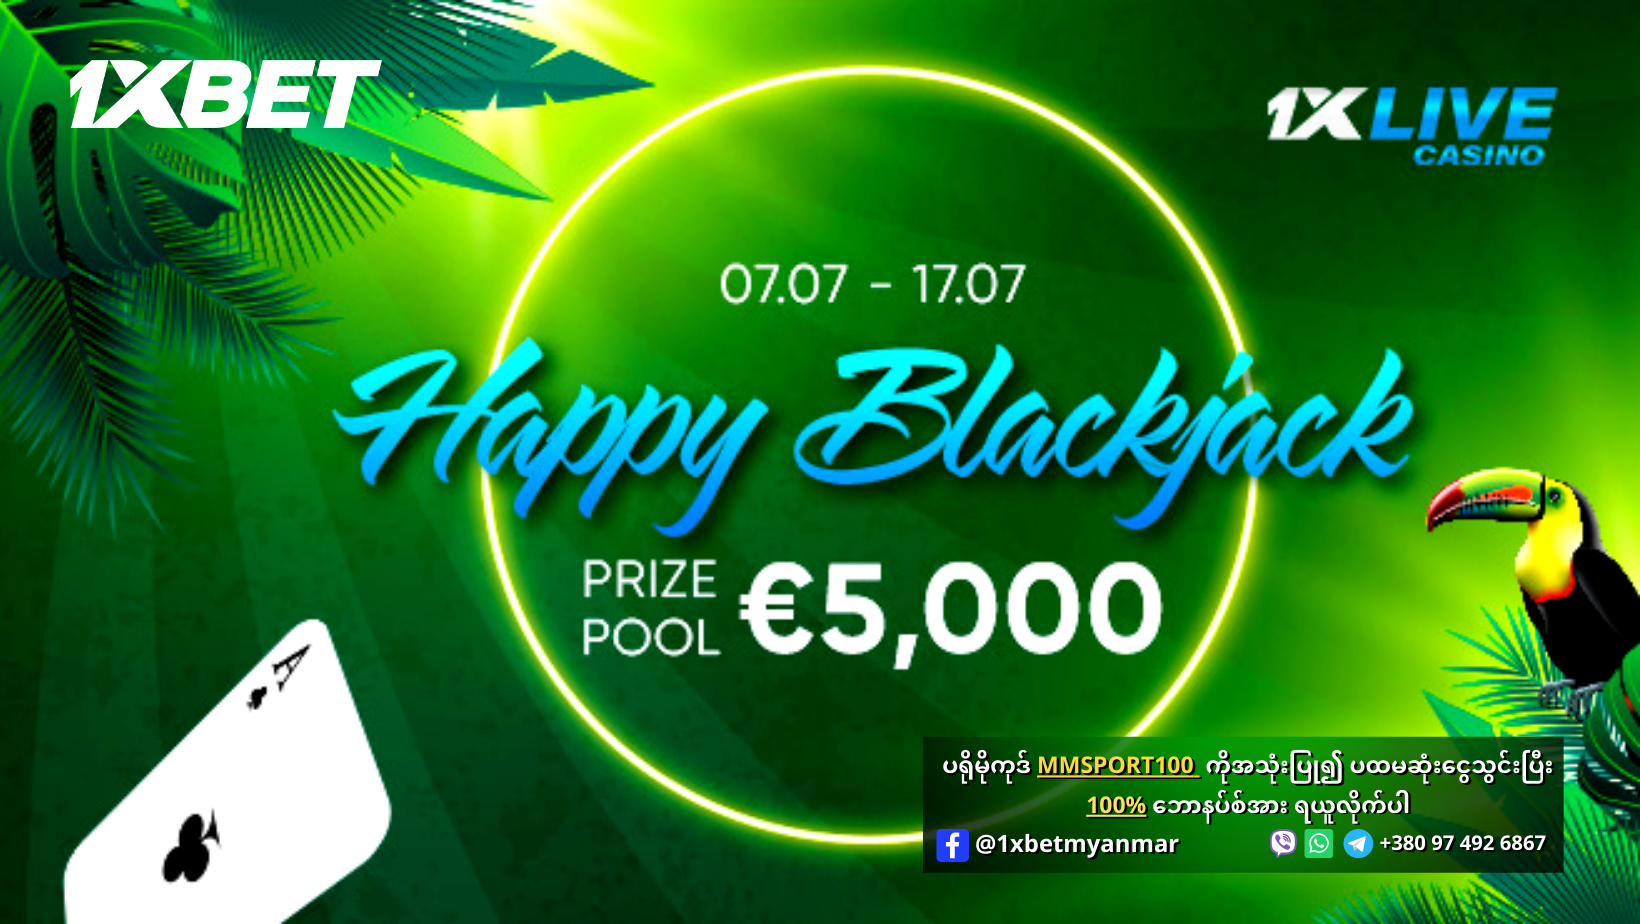 Happy Blackjack 1xBet Promotion